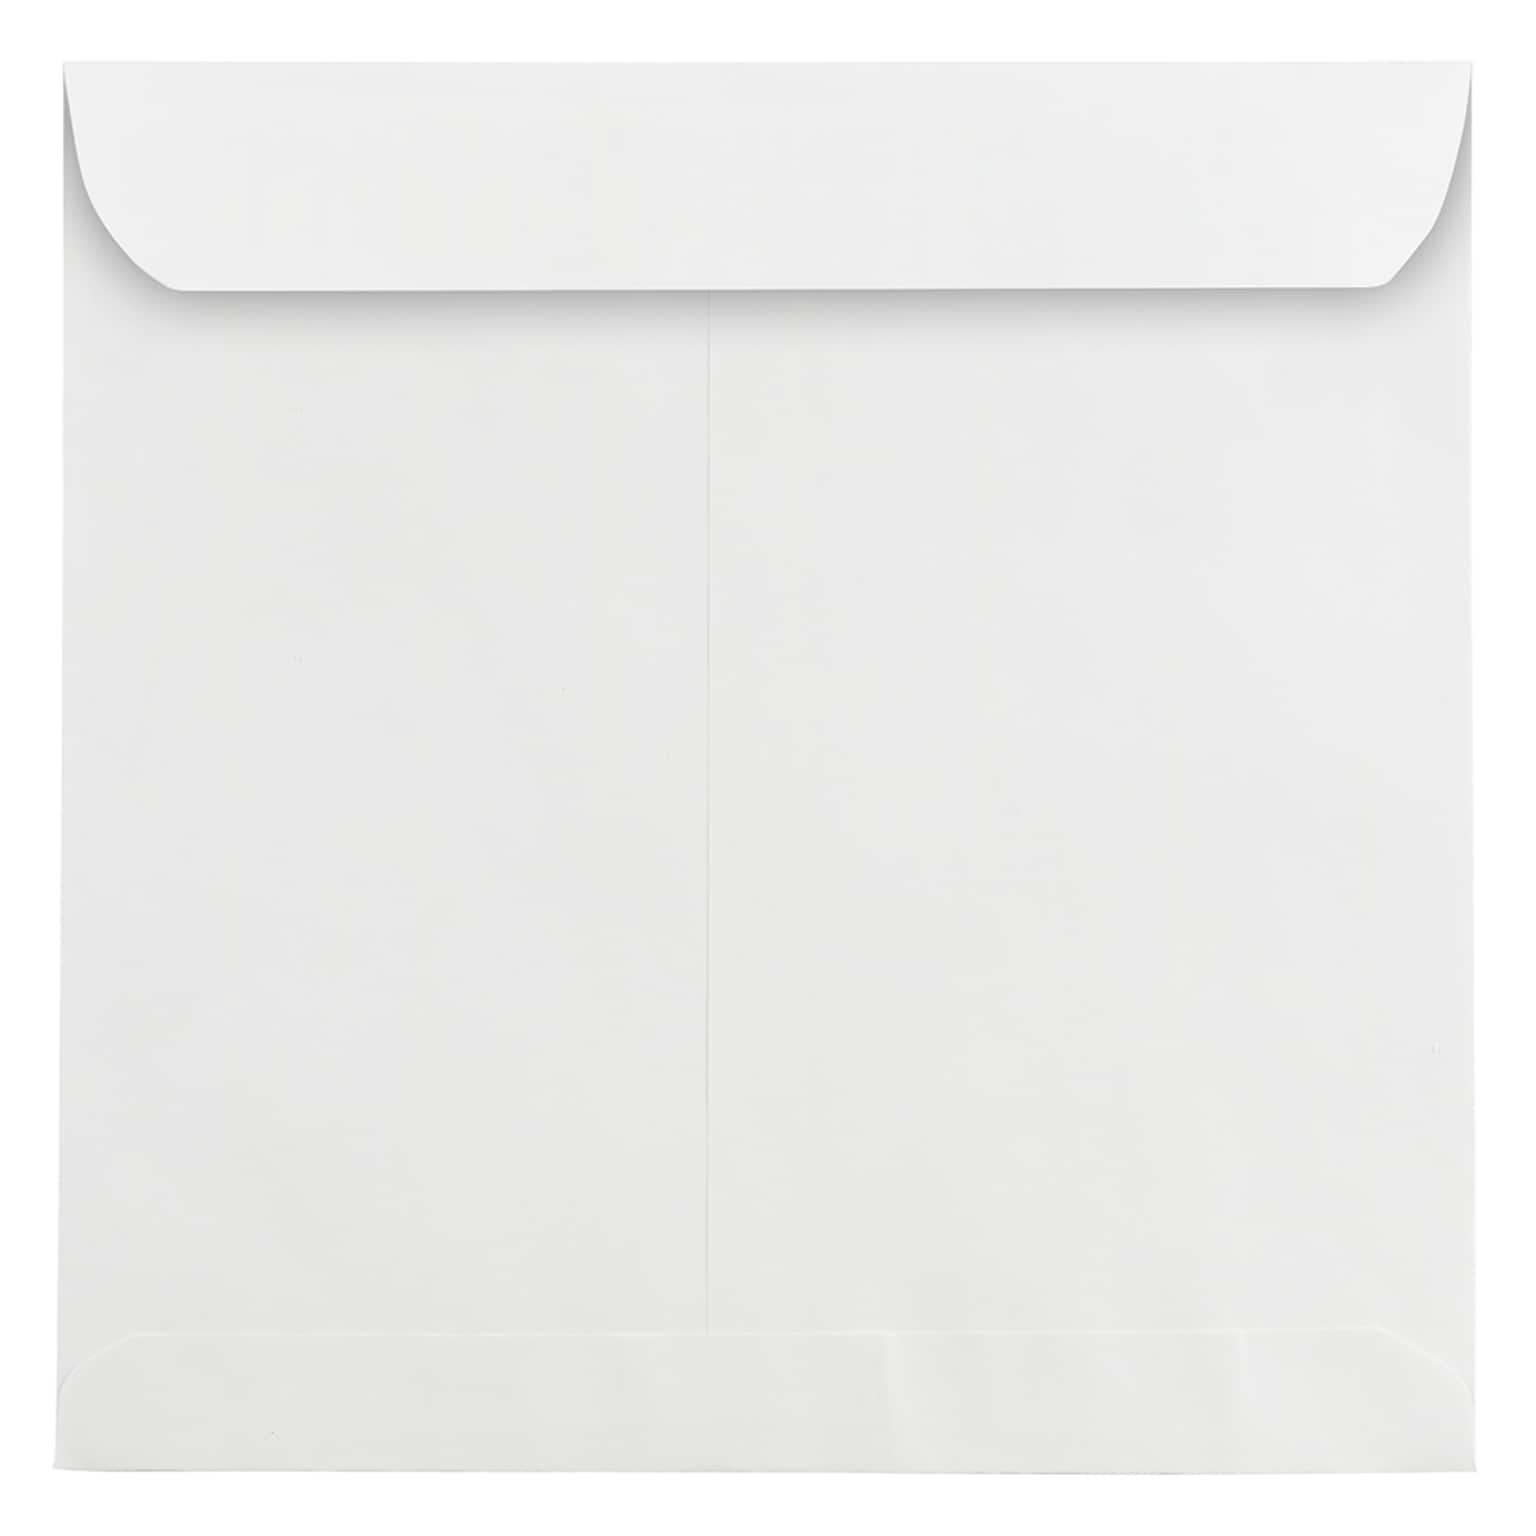 JAM Paper 11.5 x 11.5 Large Square Invitation Envelopes, White, 100/Pack (03992321B)